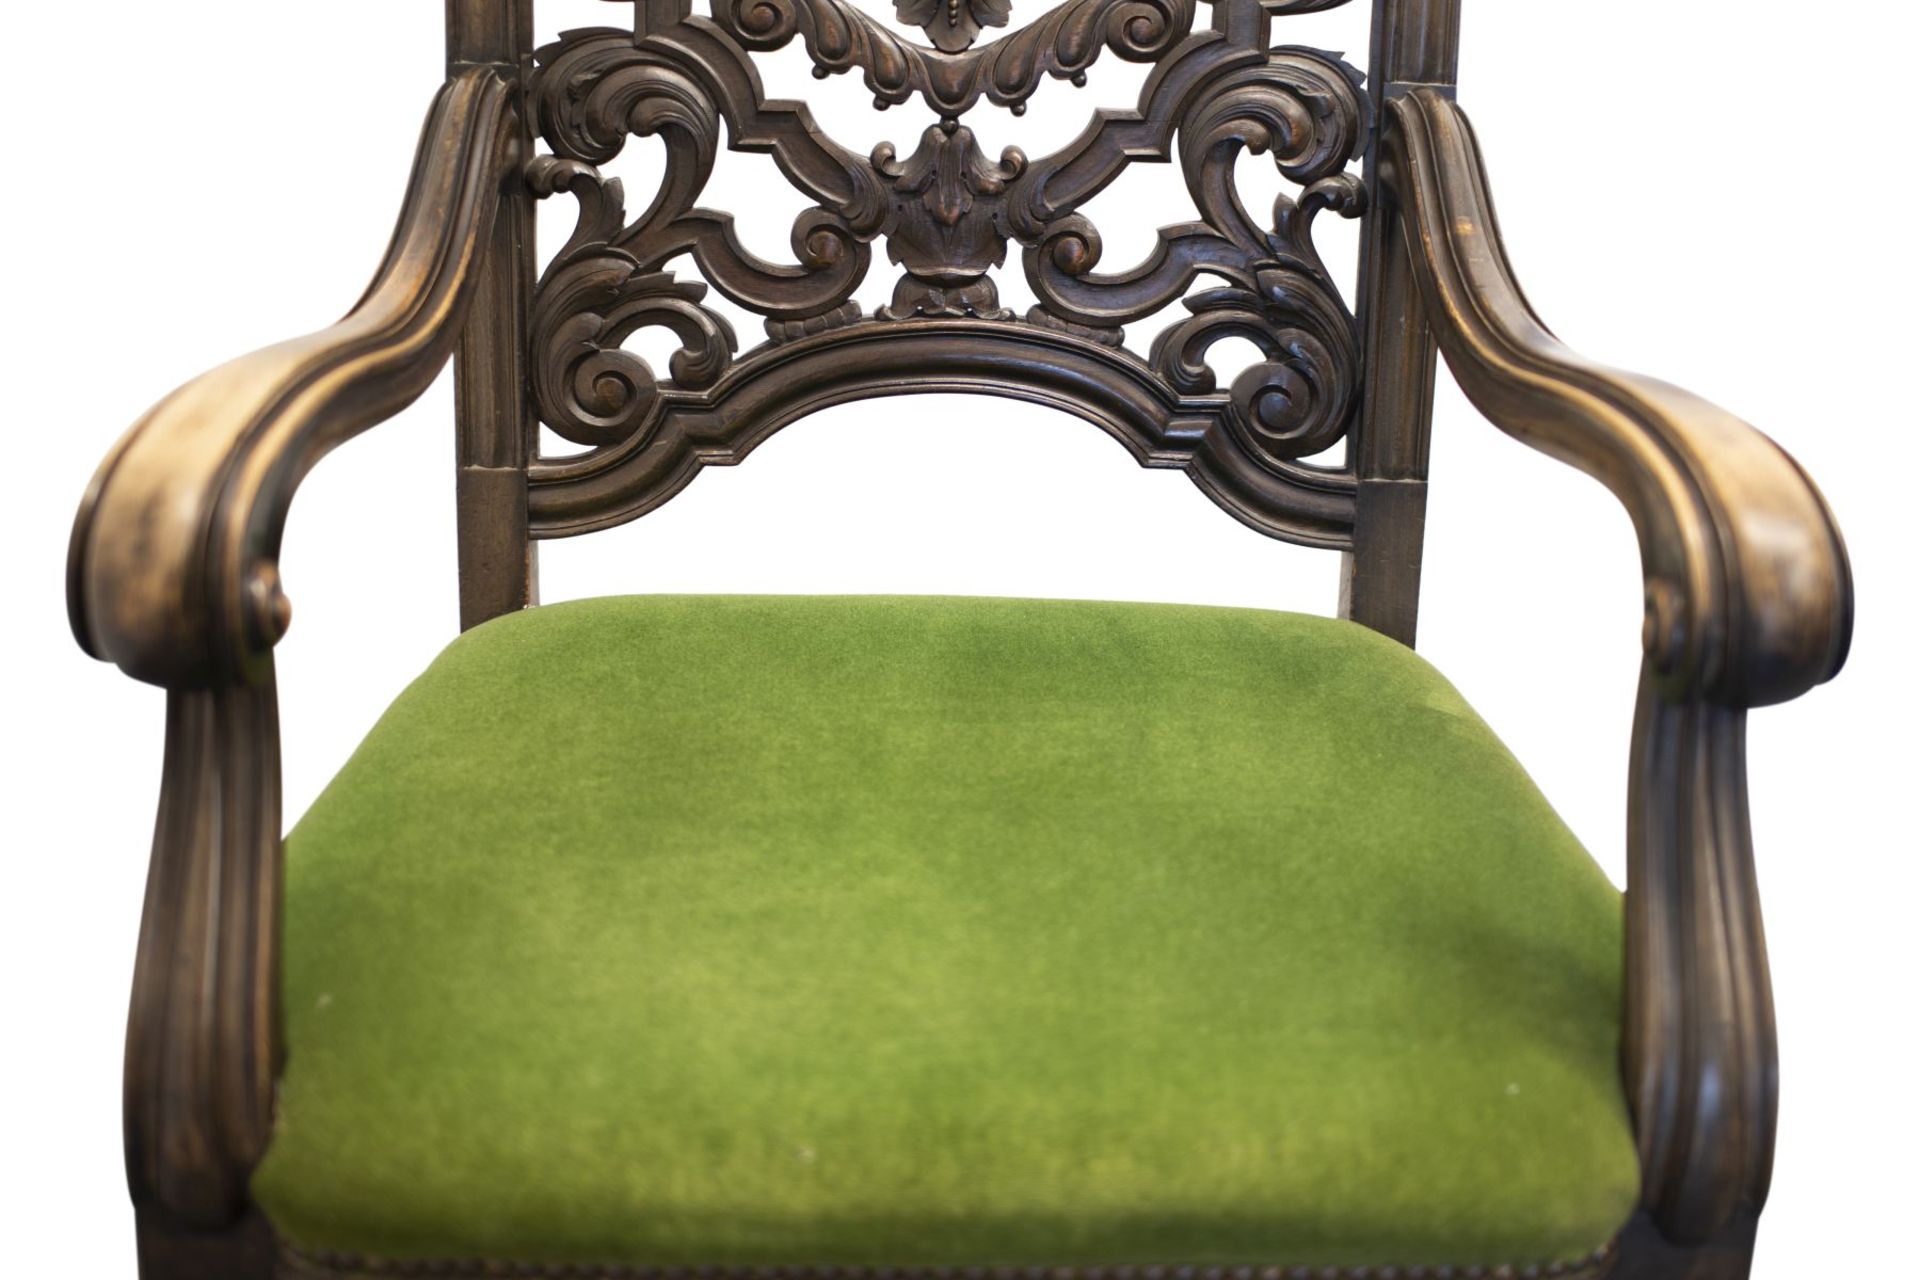 Salon Armchair, Belle Epoque Style | Salon-Armlehnstuhl, Stil Belle Epoche - Image 3 of 5